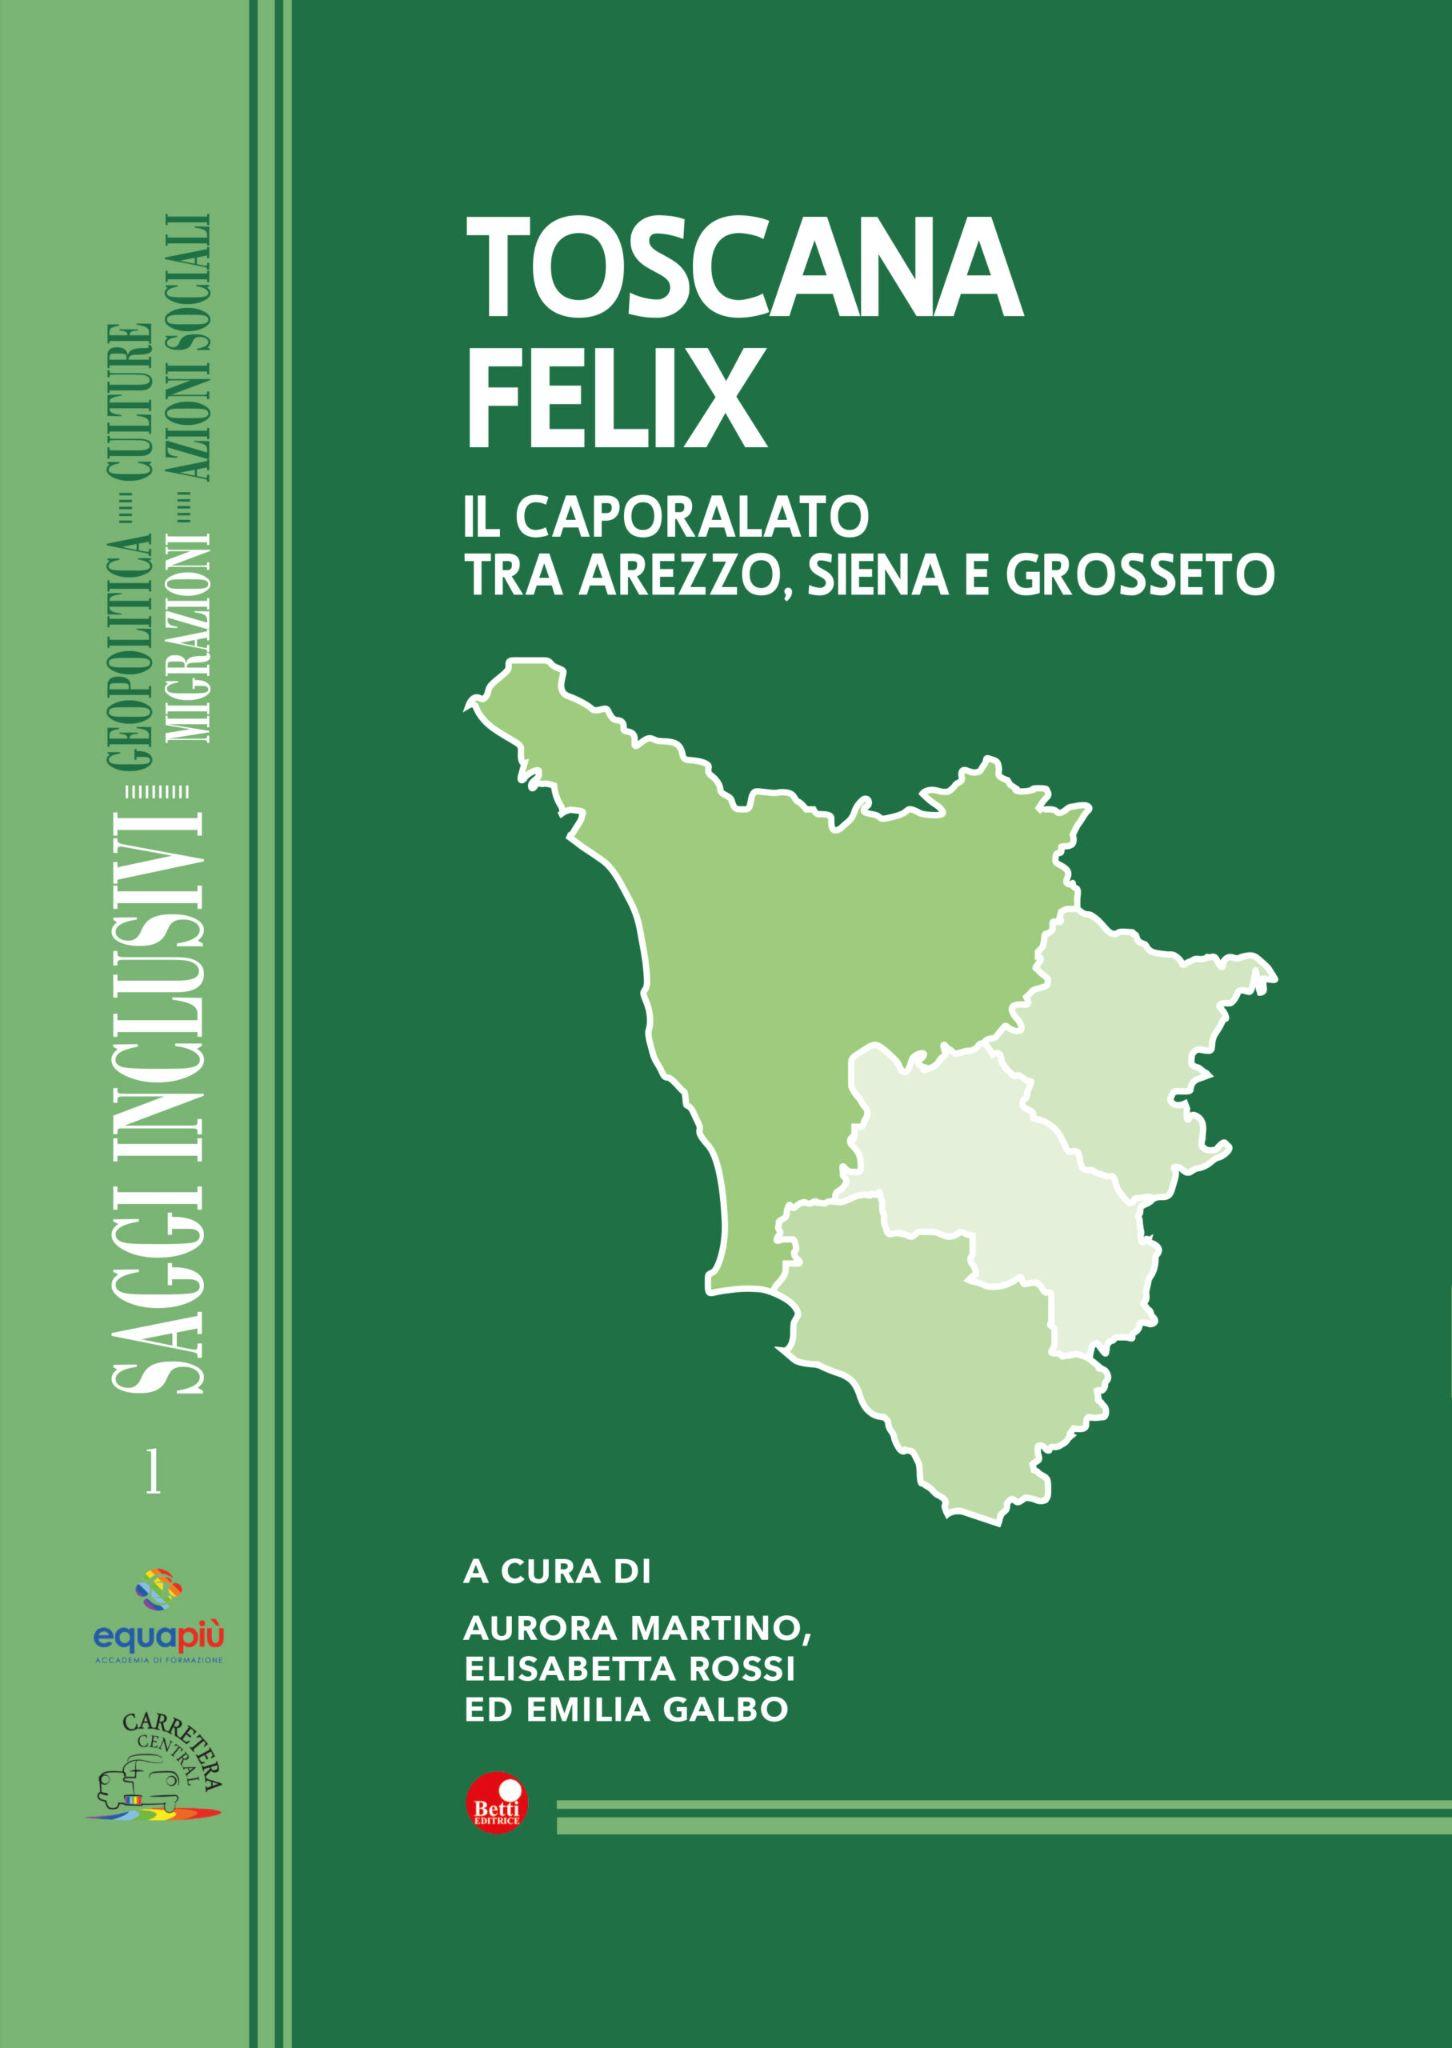 Carretera Central Toscana Felix copertina libro